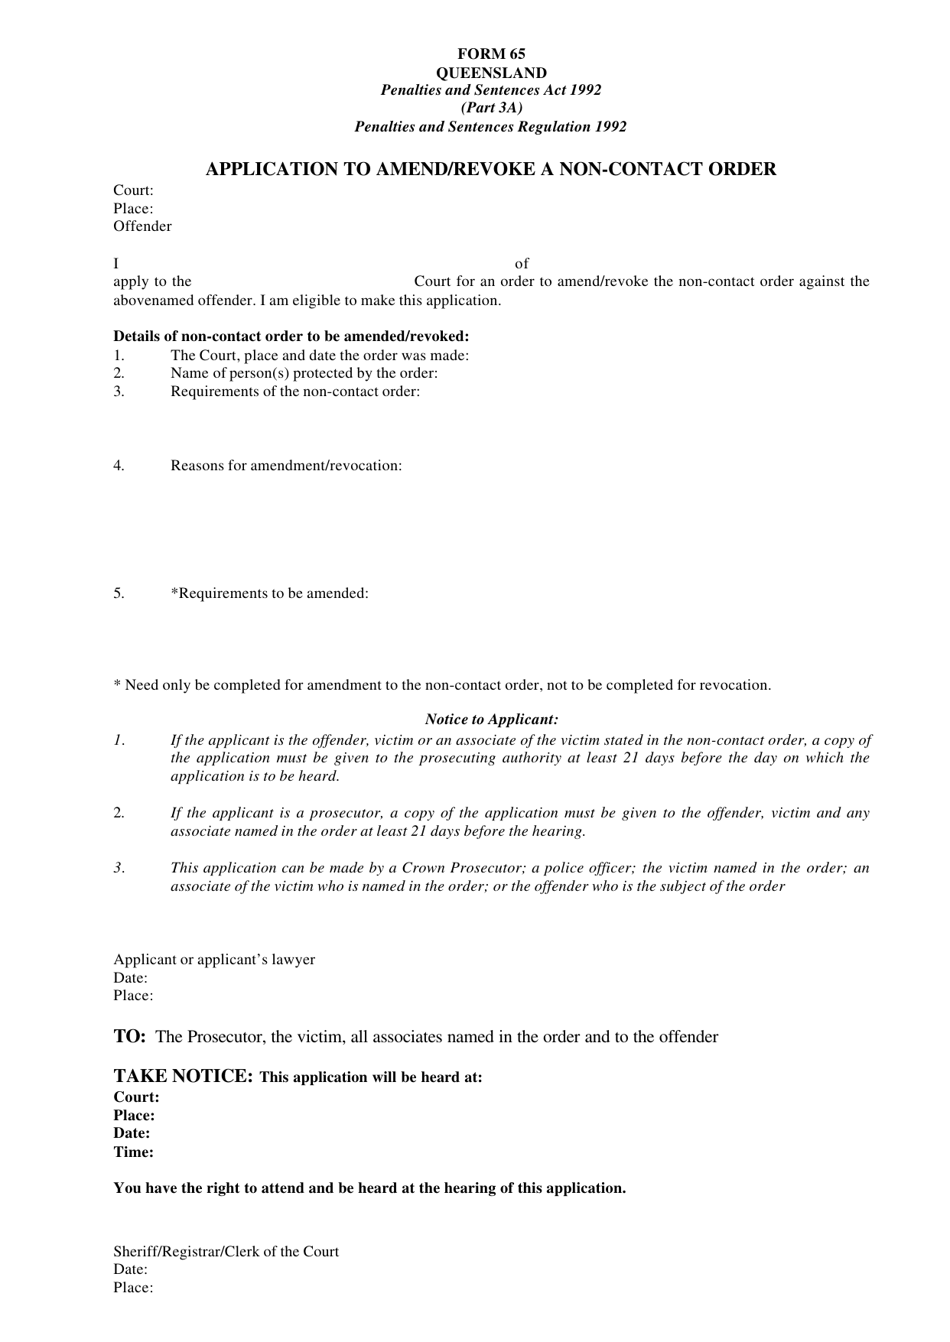 Form 65 Application to Amend / Revoke a Non-contact Order - Queensland, Australia, Page 1